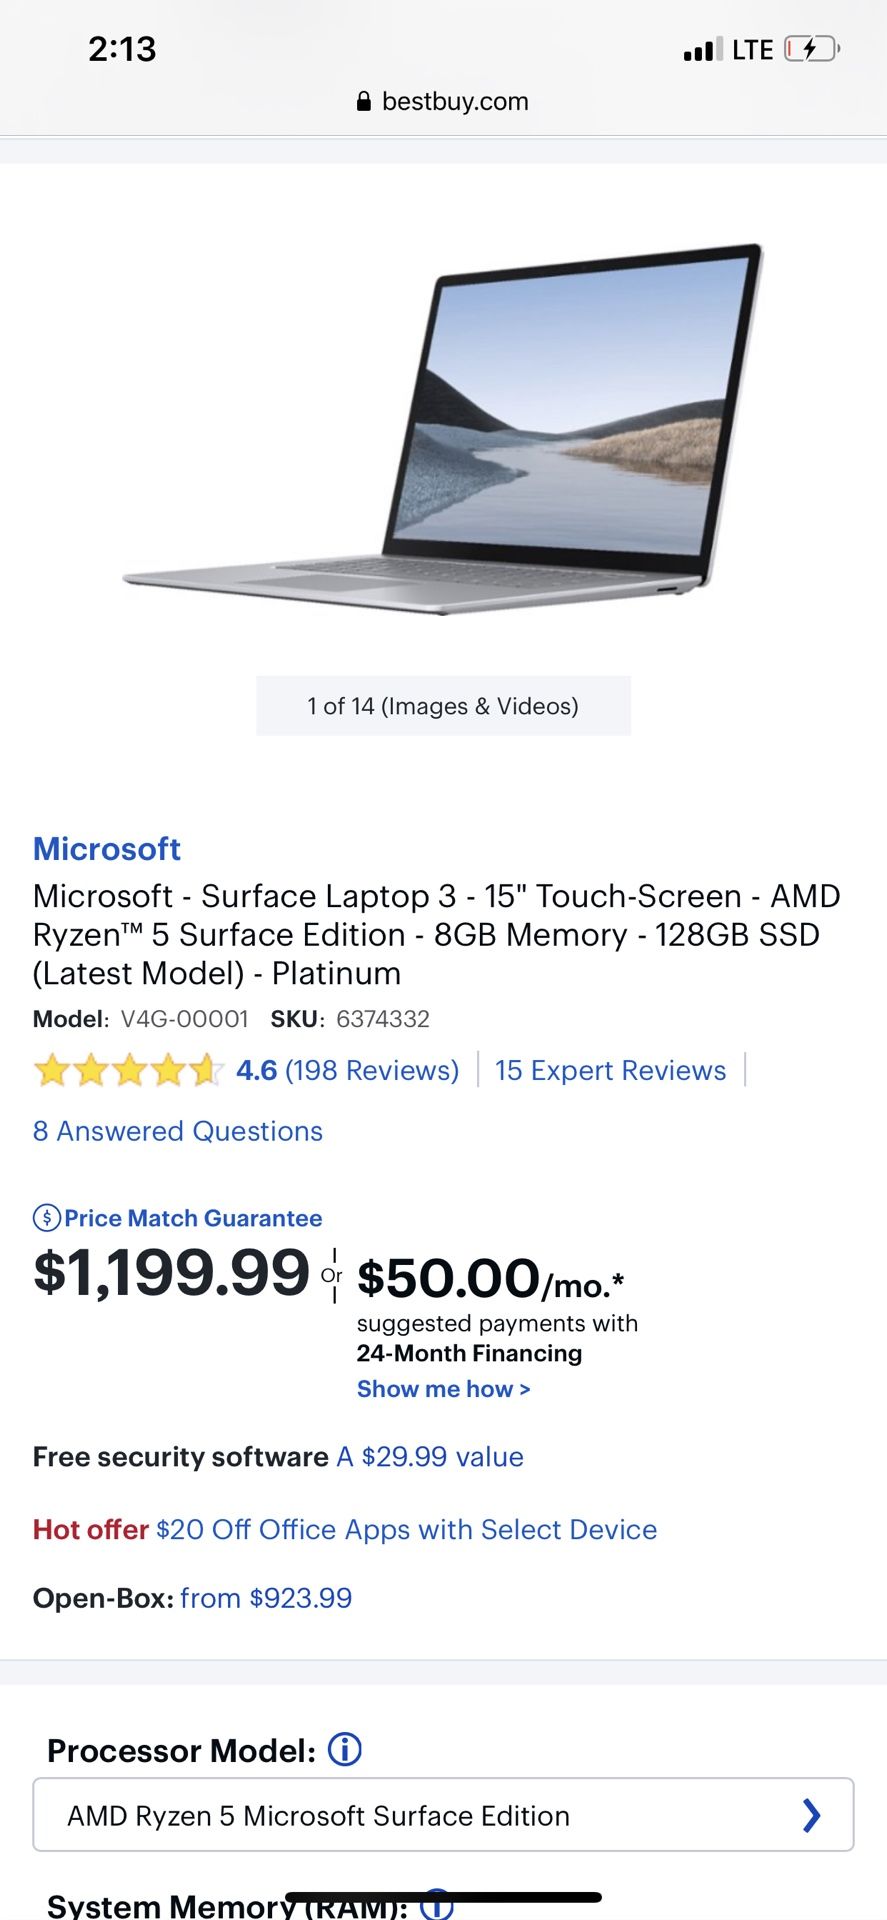 Microsoft Surface Laptop 3 15” Touchscreen